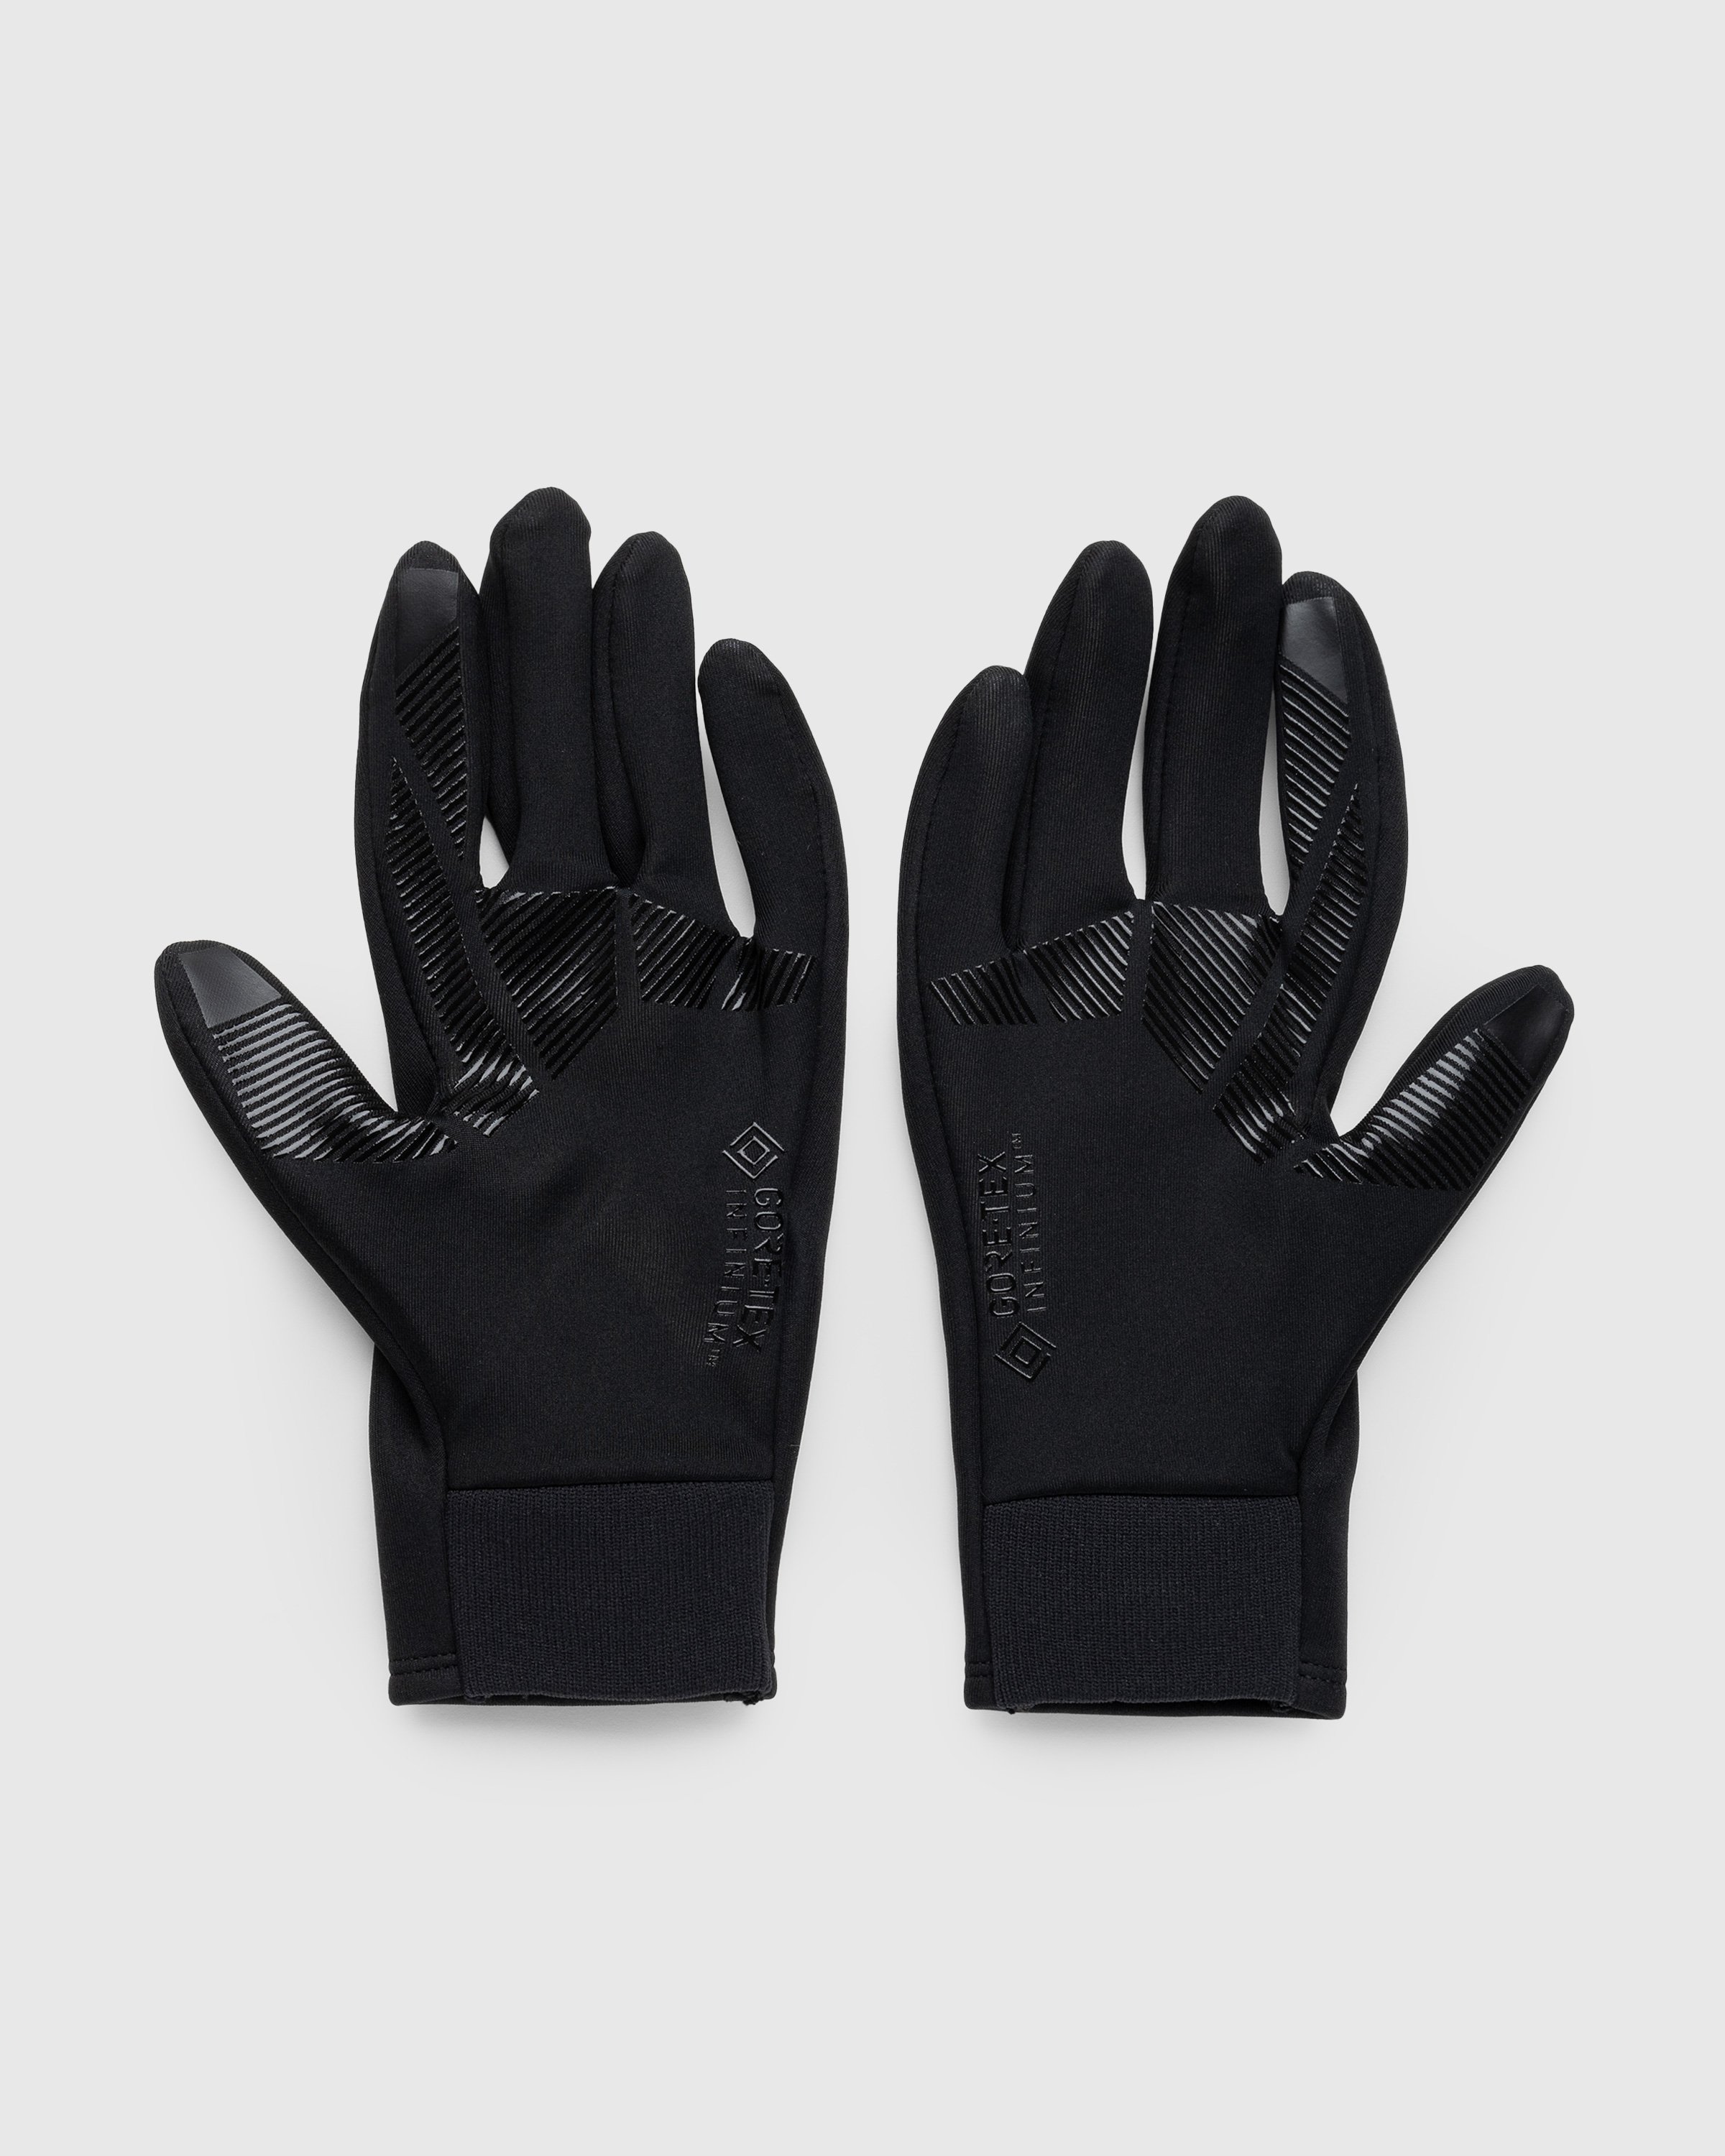 Y-3 - GTX Gloves Black - Accessories - Black - Image 2